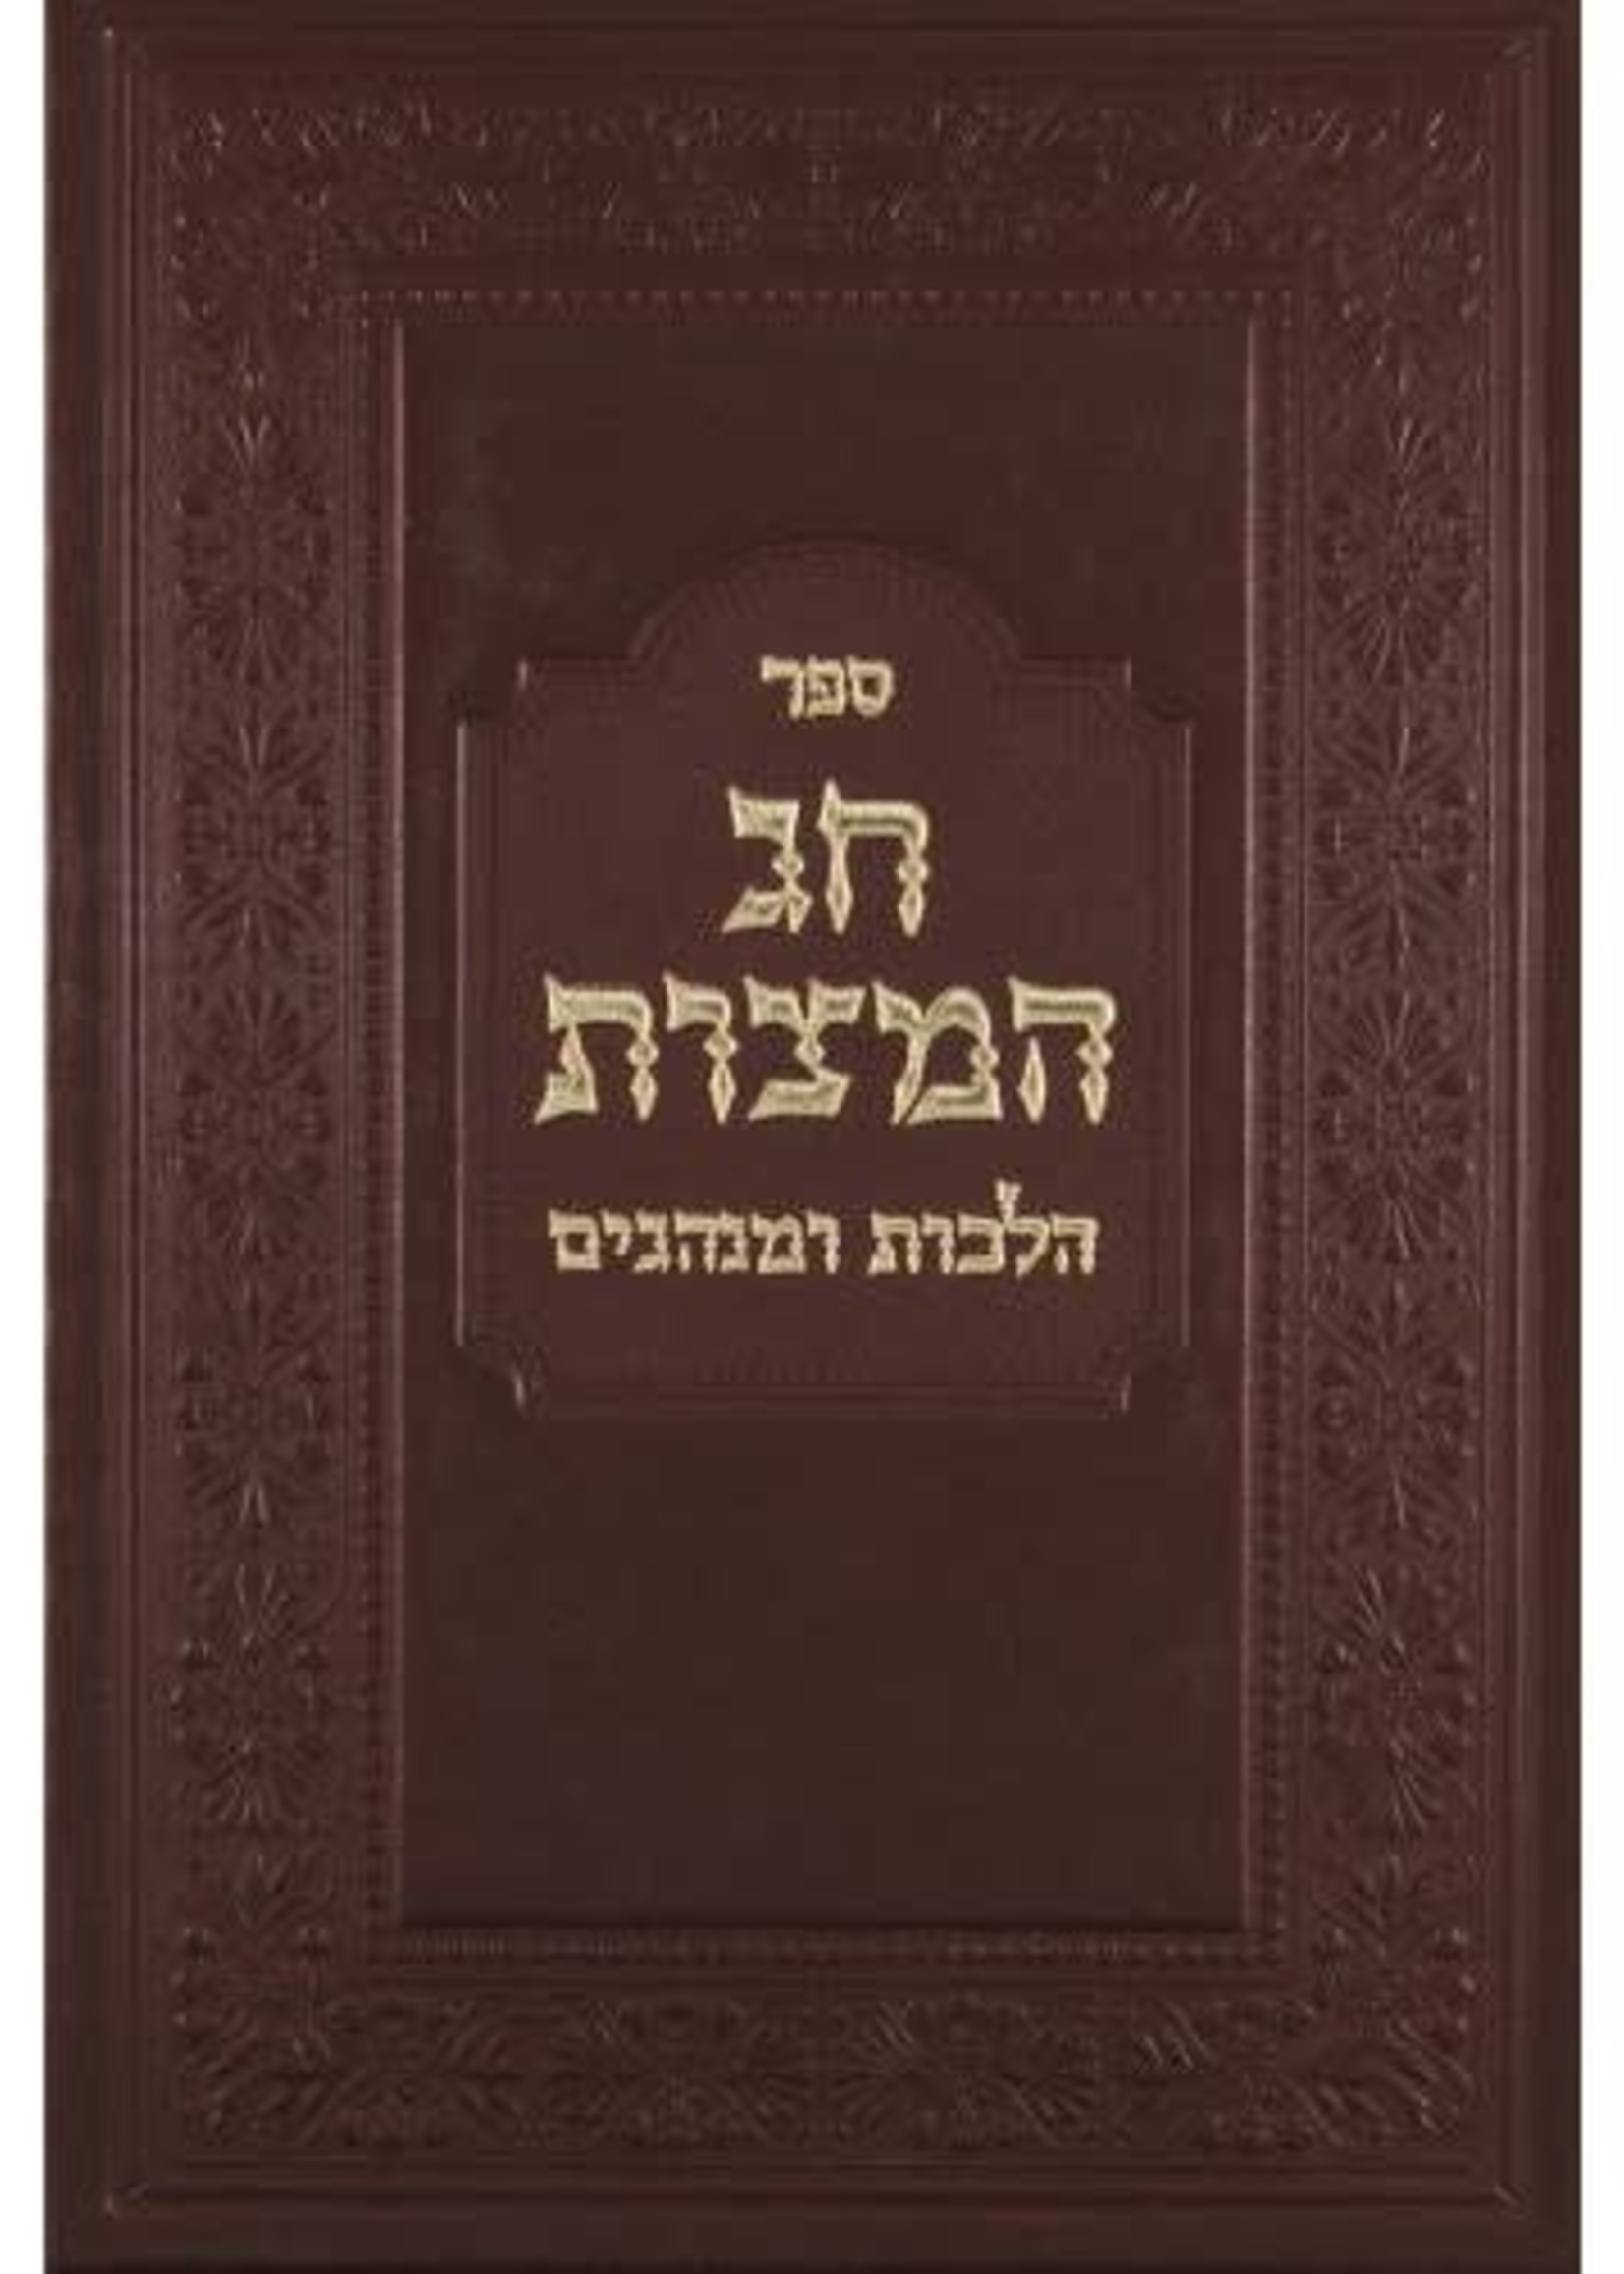 Rabbi Yitzchak Meir Liberman Chag HaMatzot - Halachot UMinhgim/  חג המצות - הלכות ומנהגים